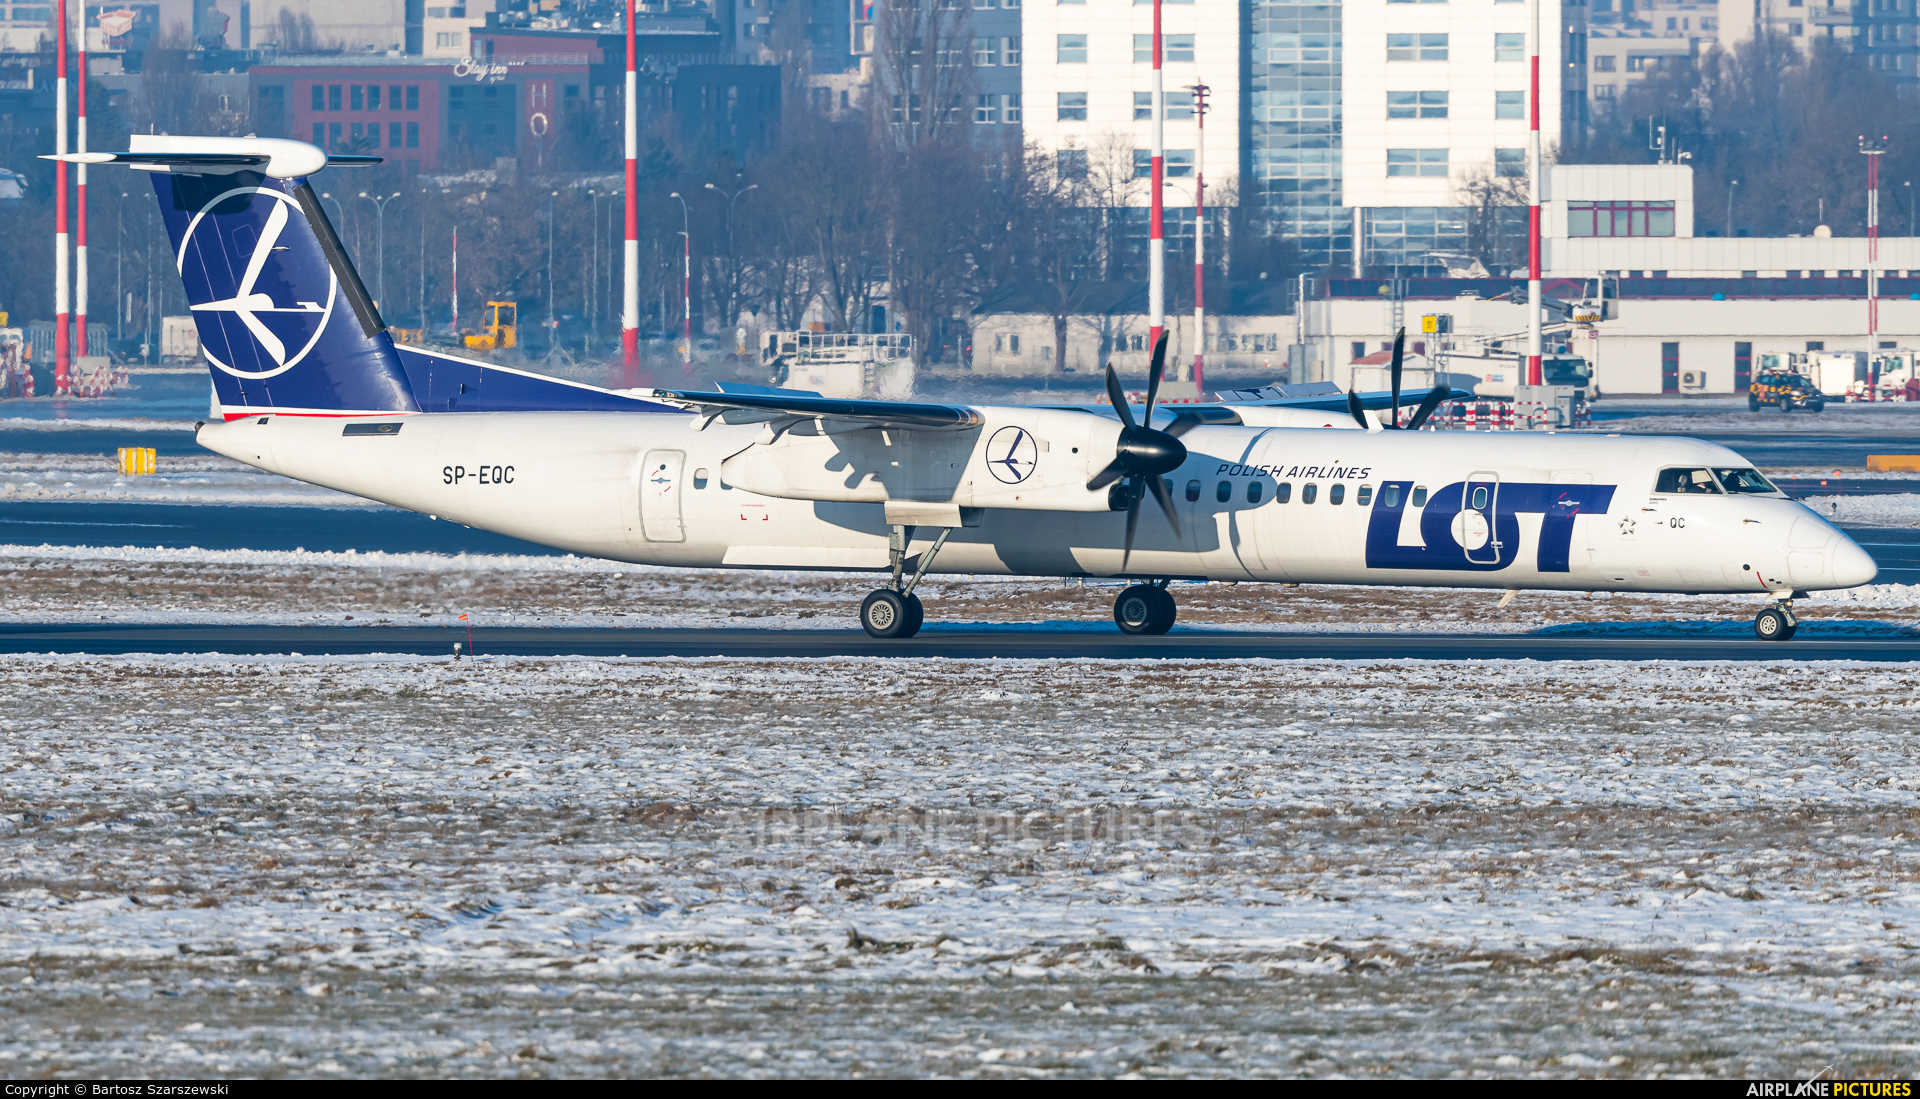 LOT - Polish Airlines SP-EQC aircraft at Warsaw - Frederic Chopin